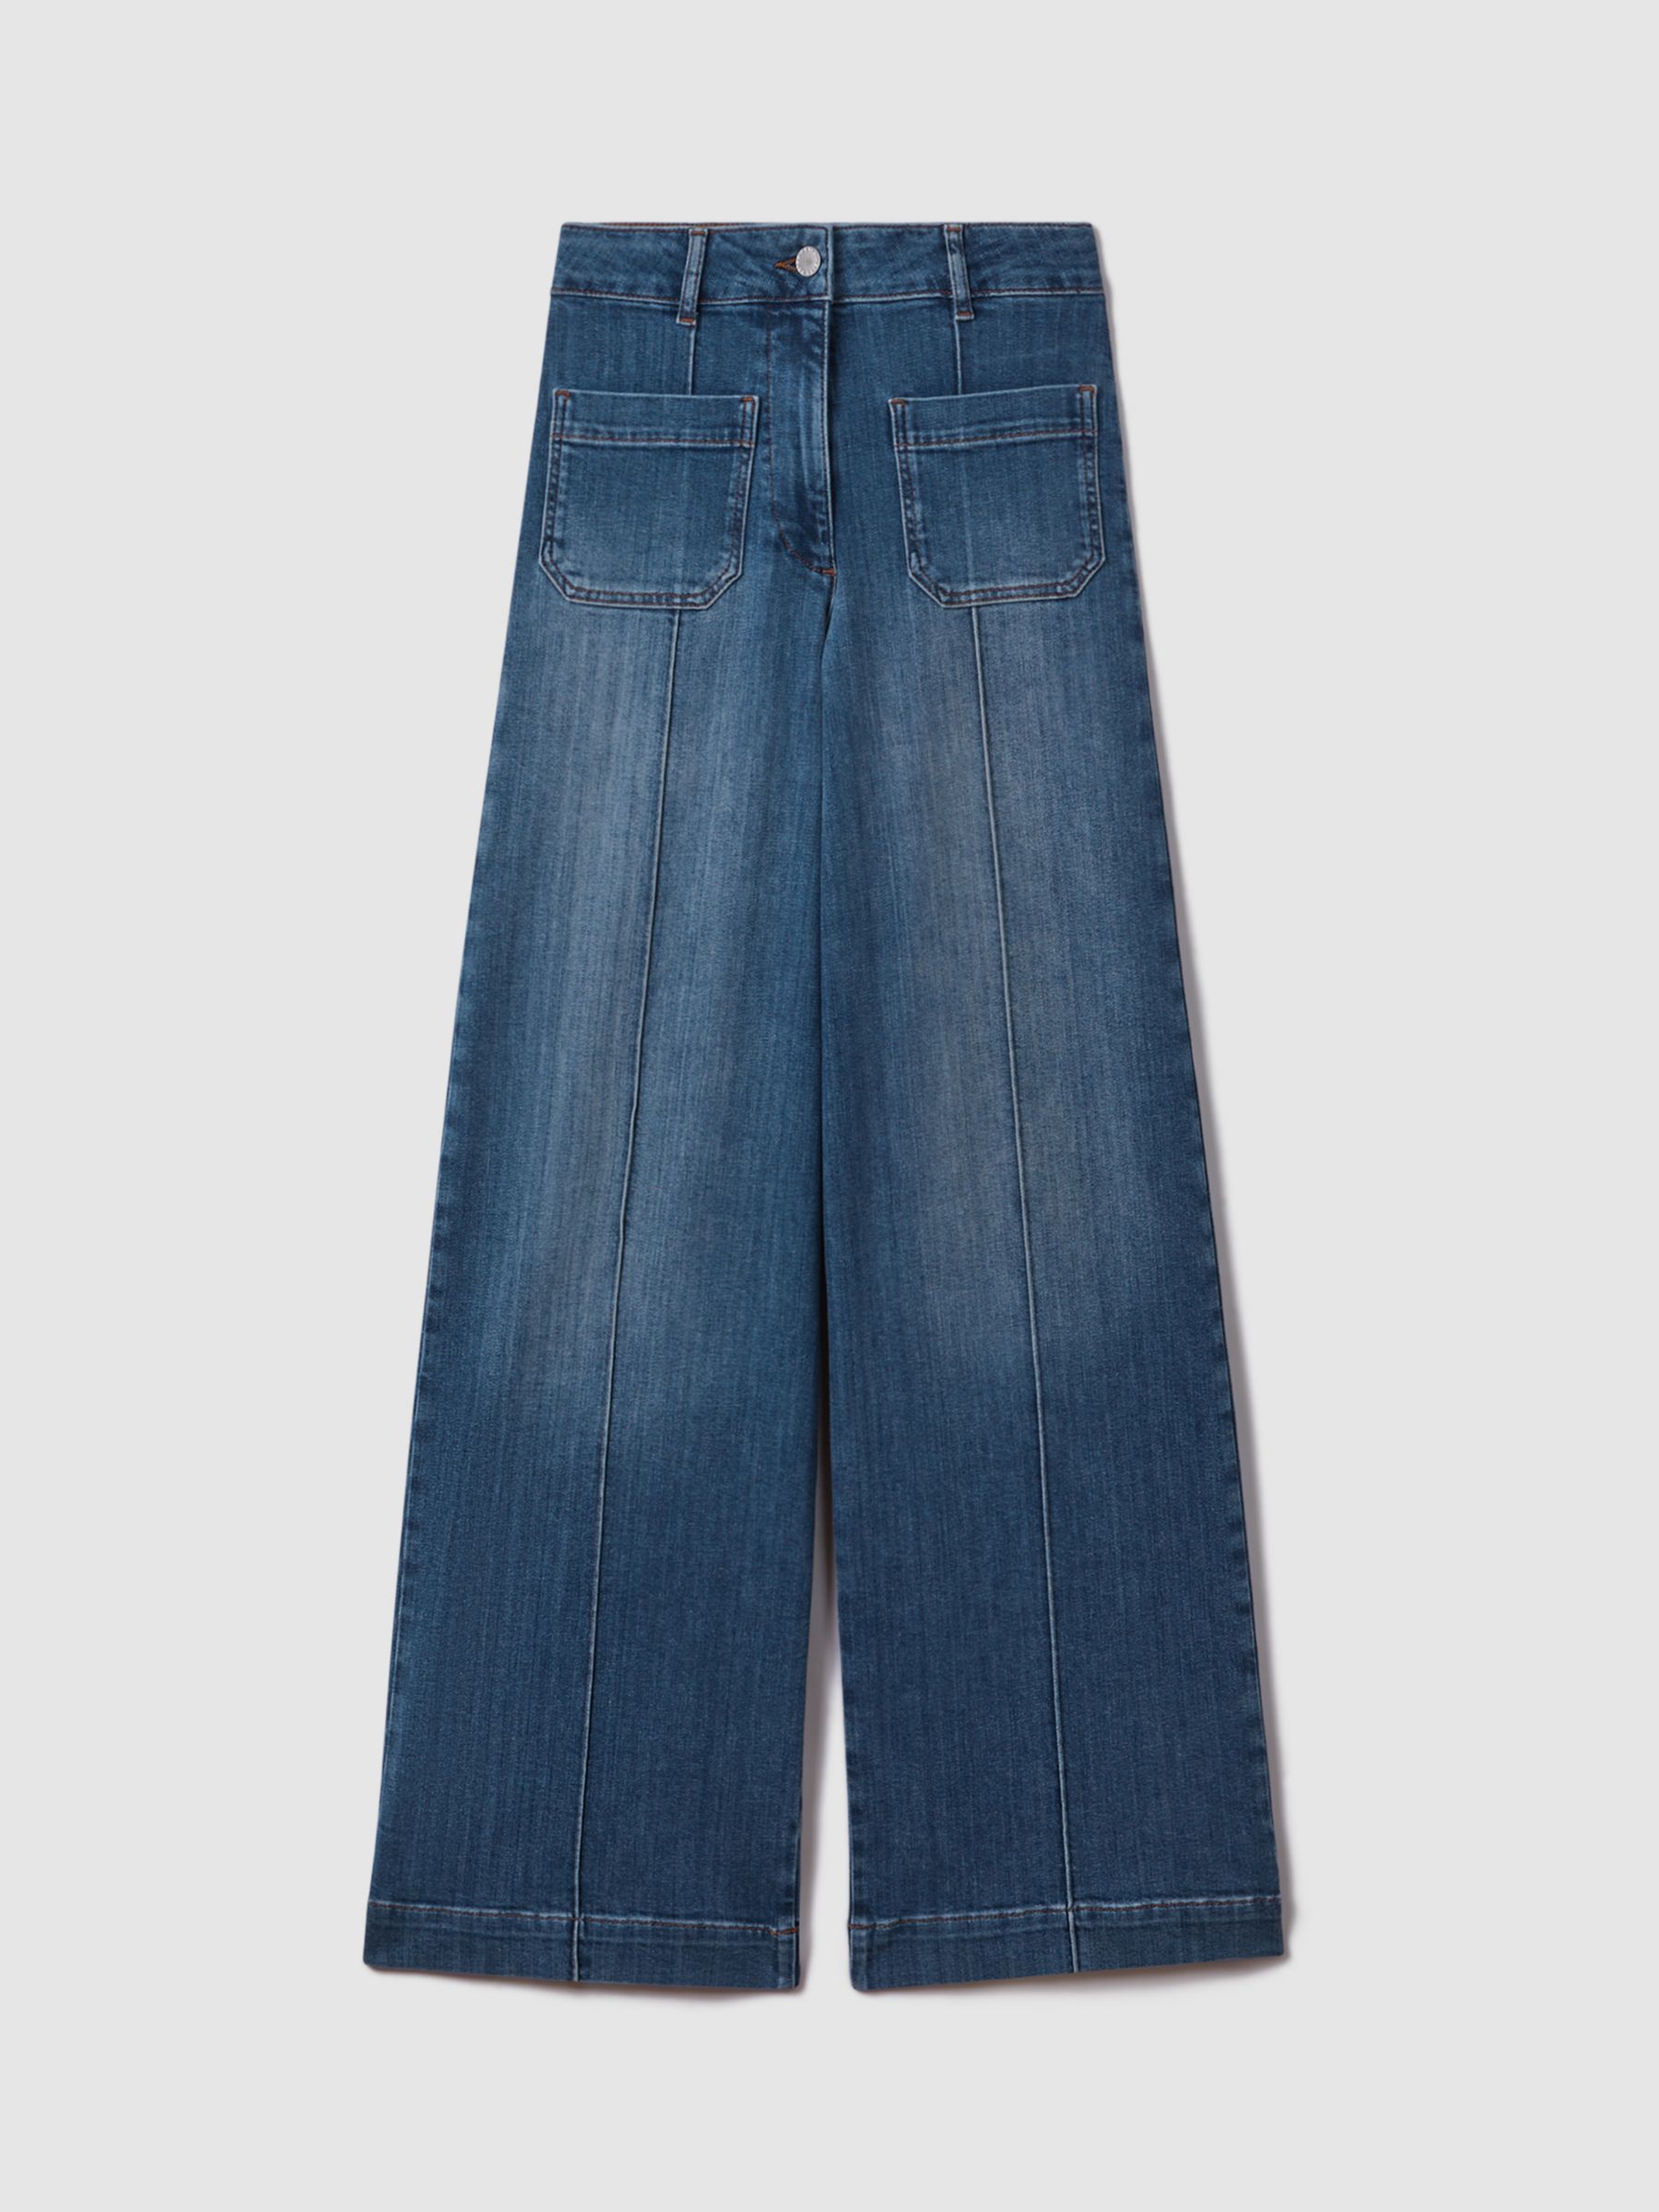 Reiss Kira Wide Leg Seam Detail Jeans, Mid Blue, 24R